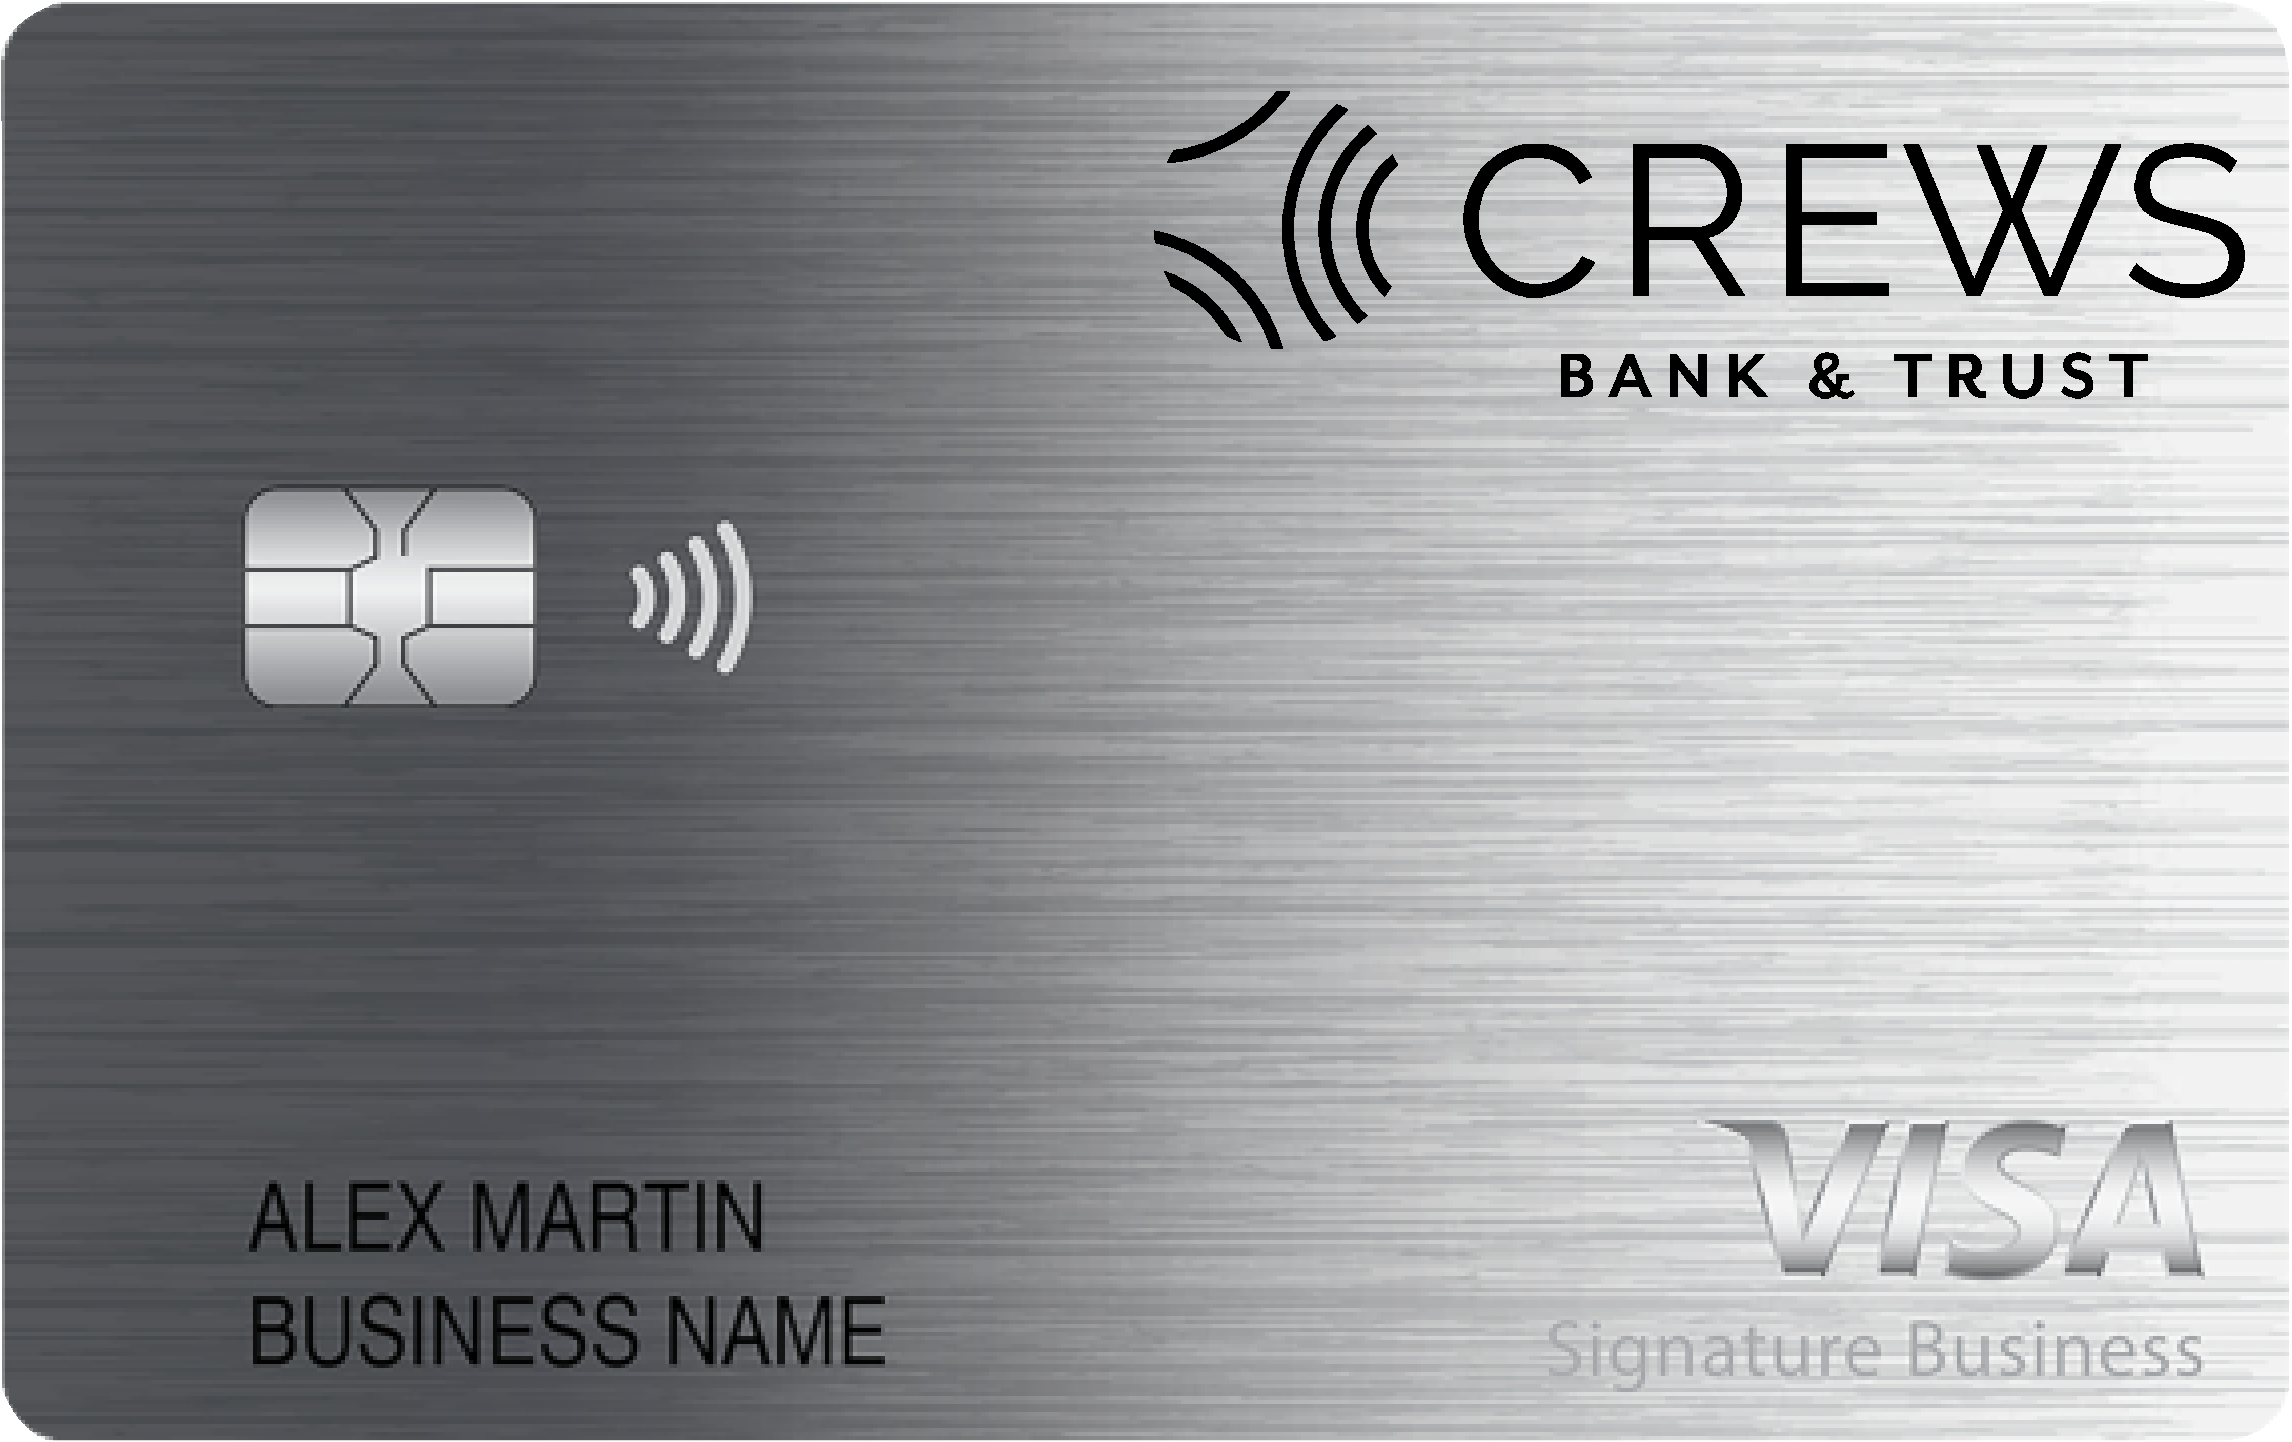 Crews Bank & Trust Smart Business Rewards Card